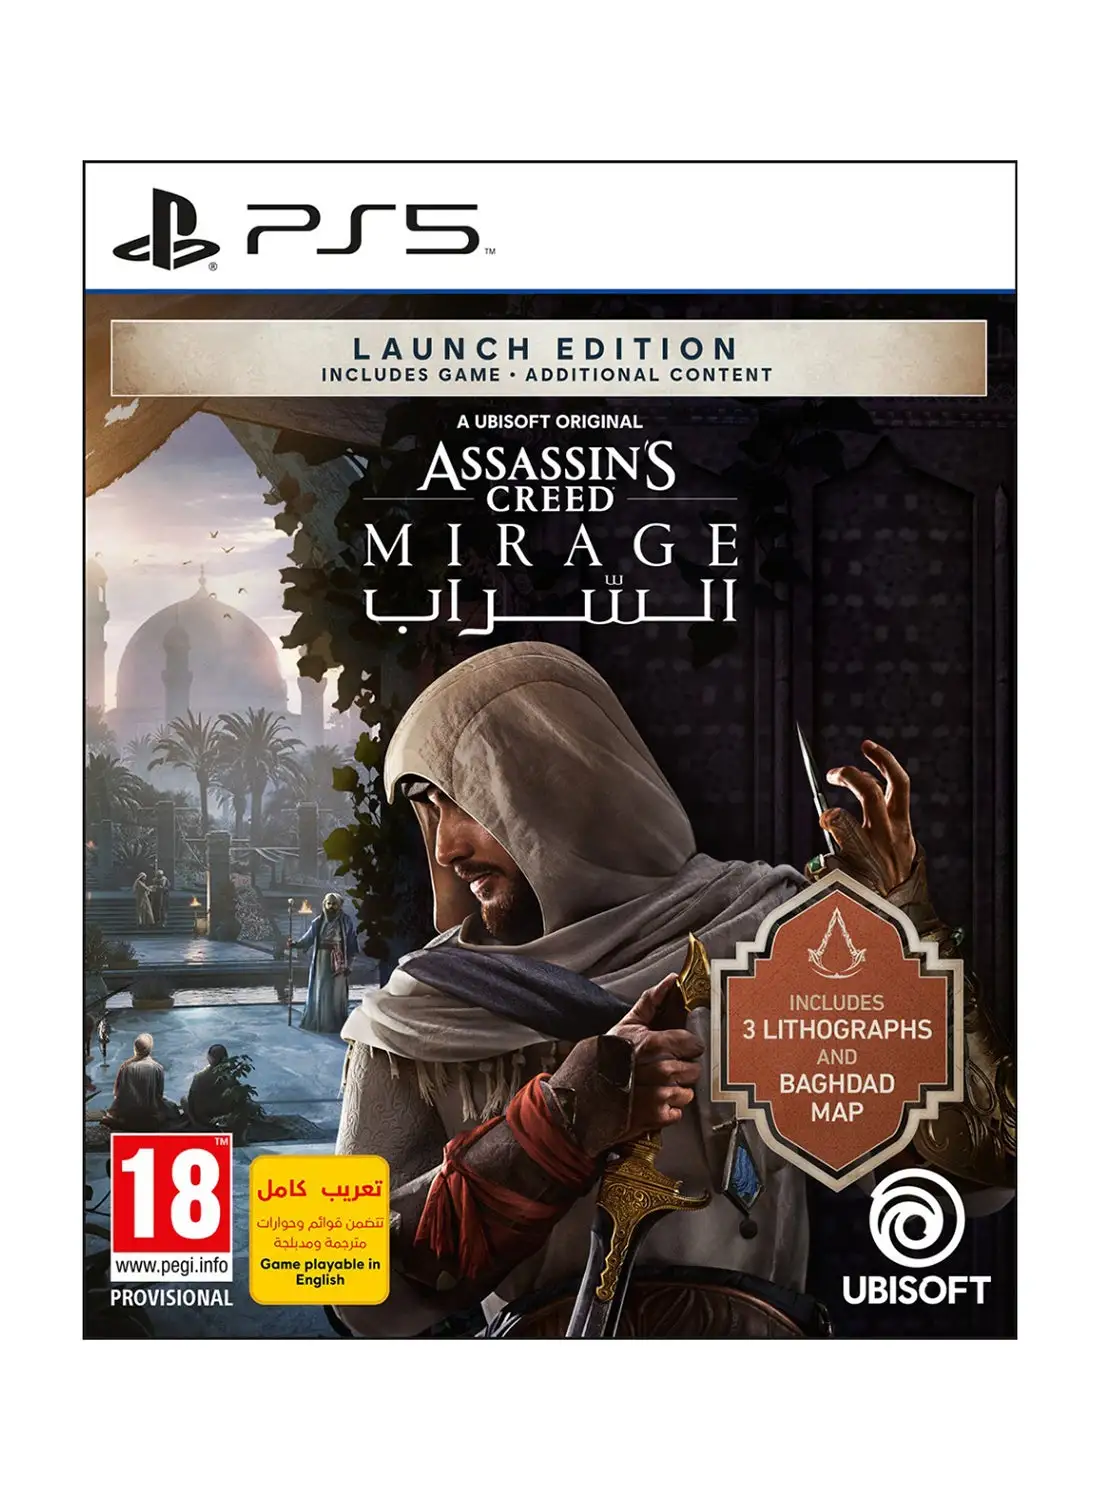 Ubisoft Assassin’s Creed Mirage (UAE Version) - PlayStation 5 (PS5)